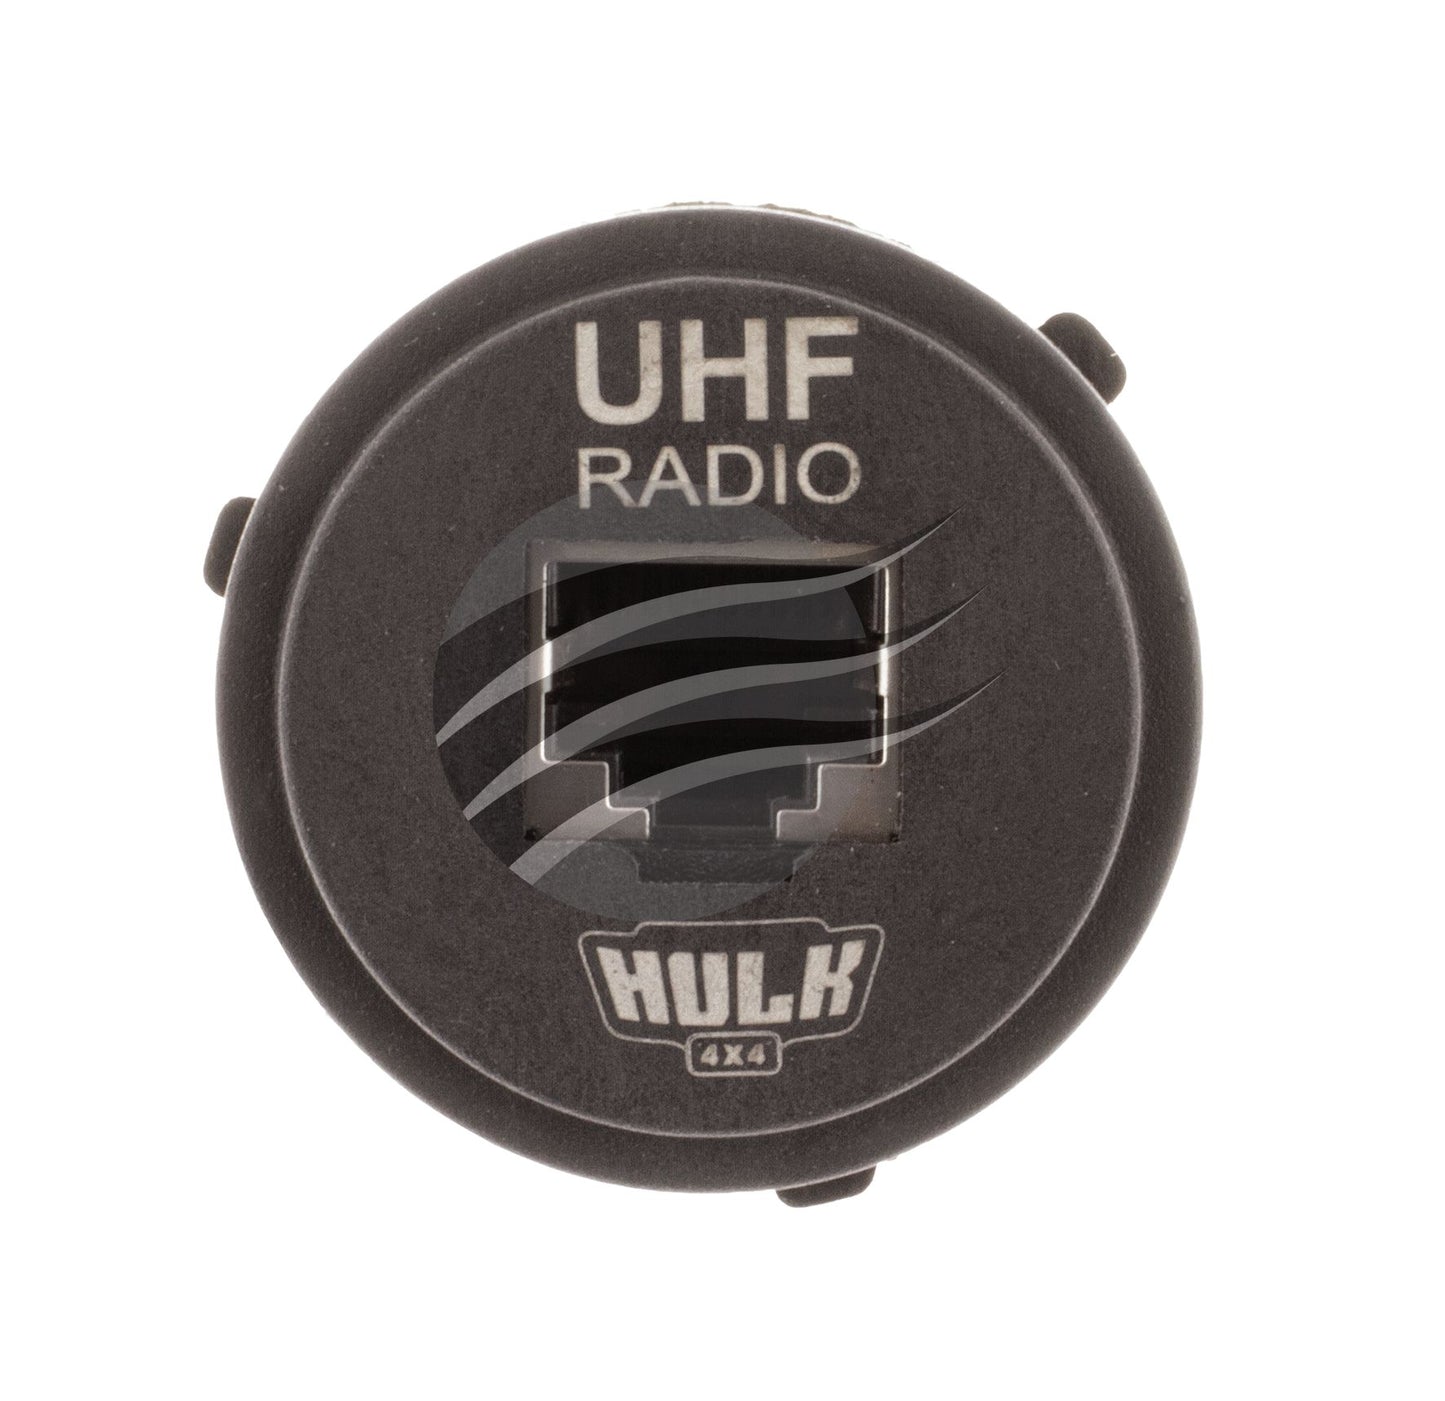 Hulk 4x4 RJ45 UHF Radio Socket 29mm Diameter